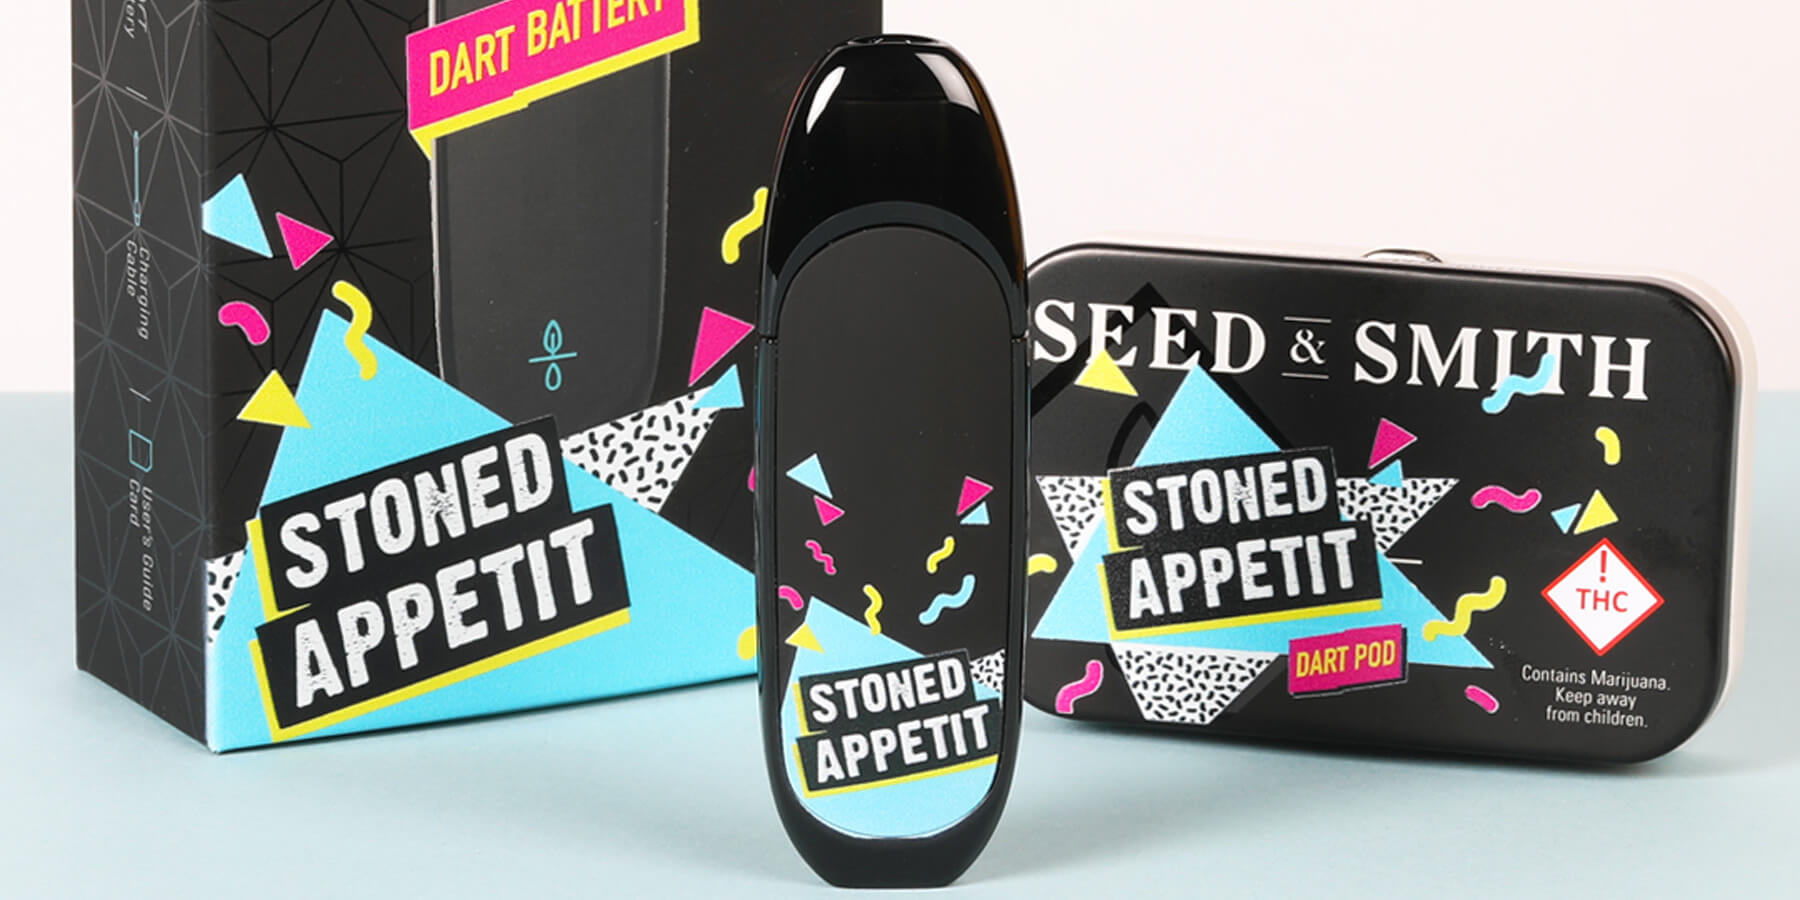 Stoned Appetit Seed & Smith Dart Pod